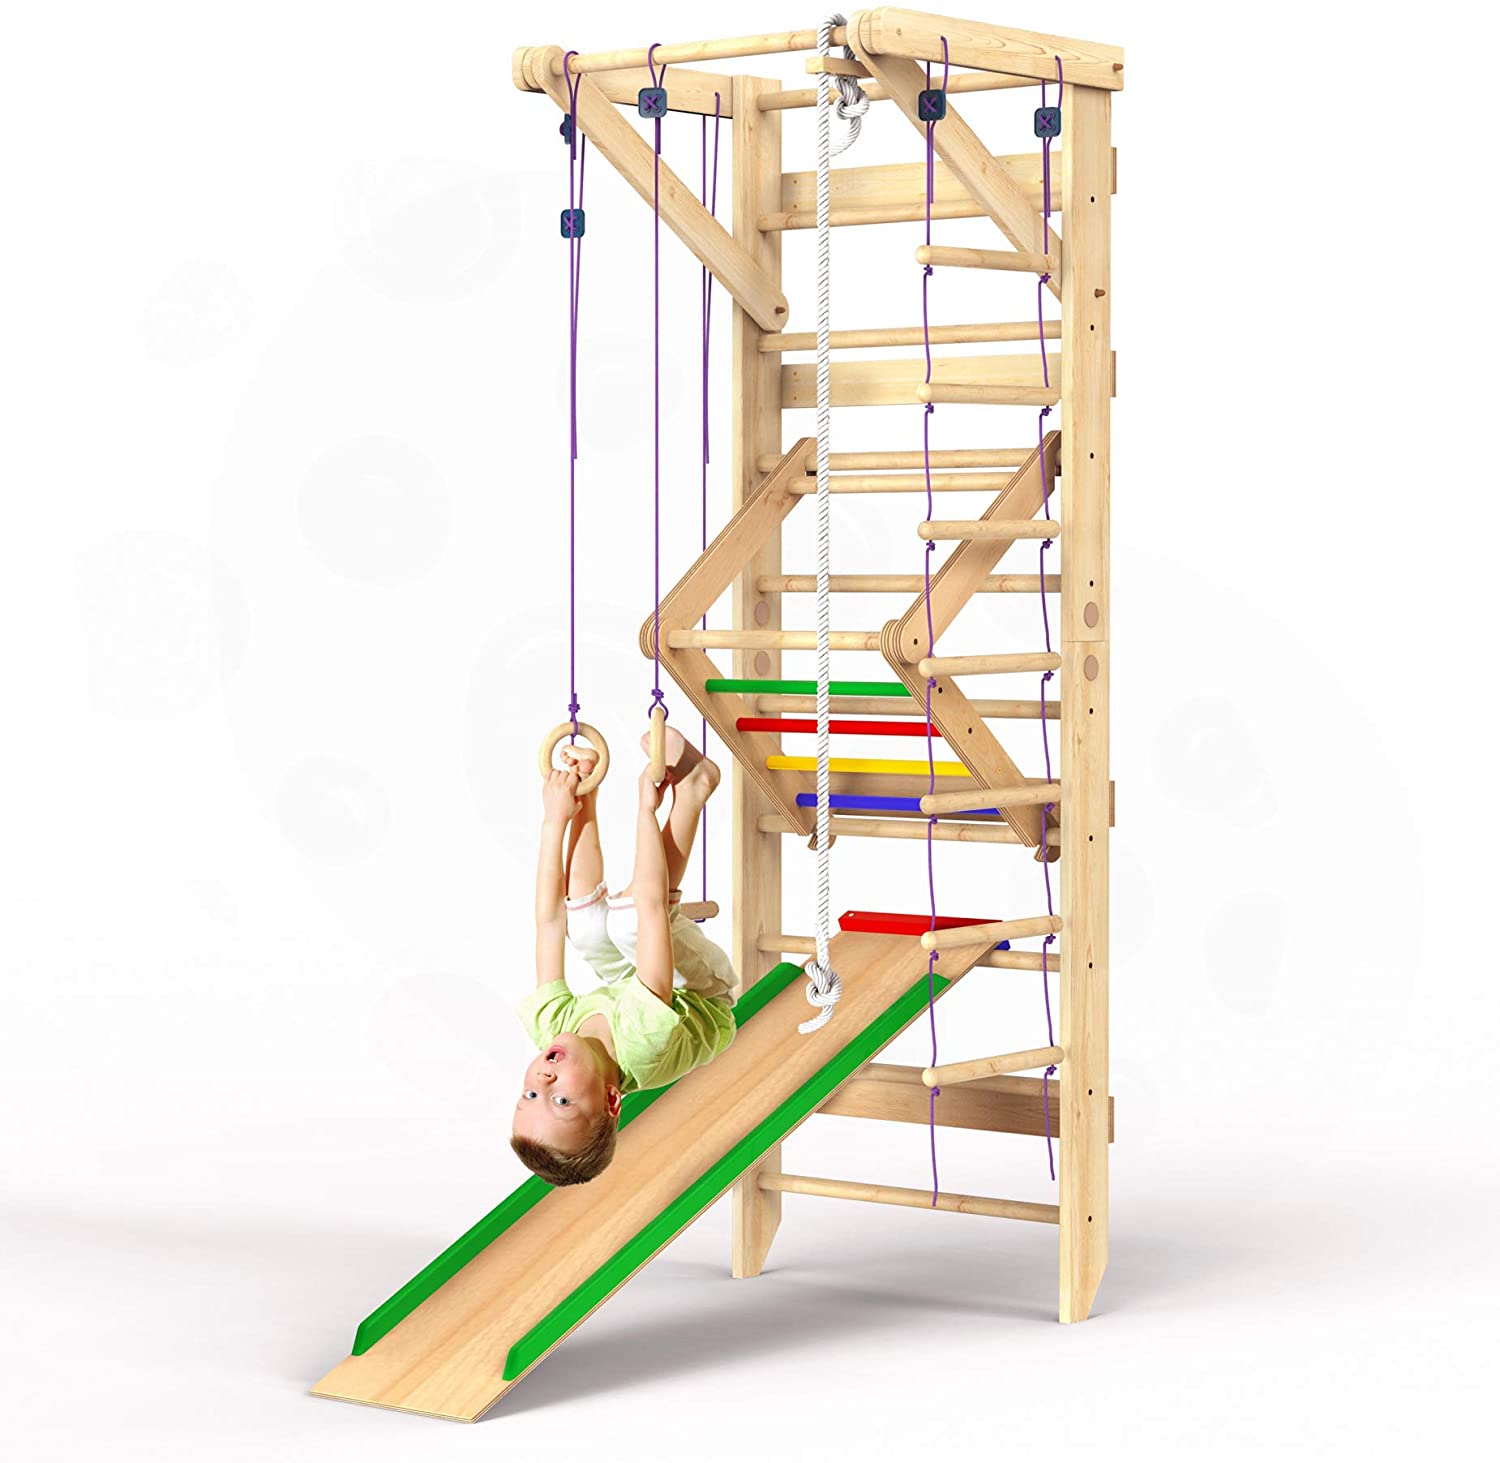 Review of Wedanta Swedish Ladder Wall Gym